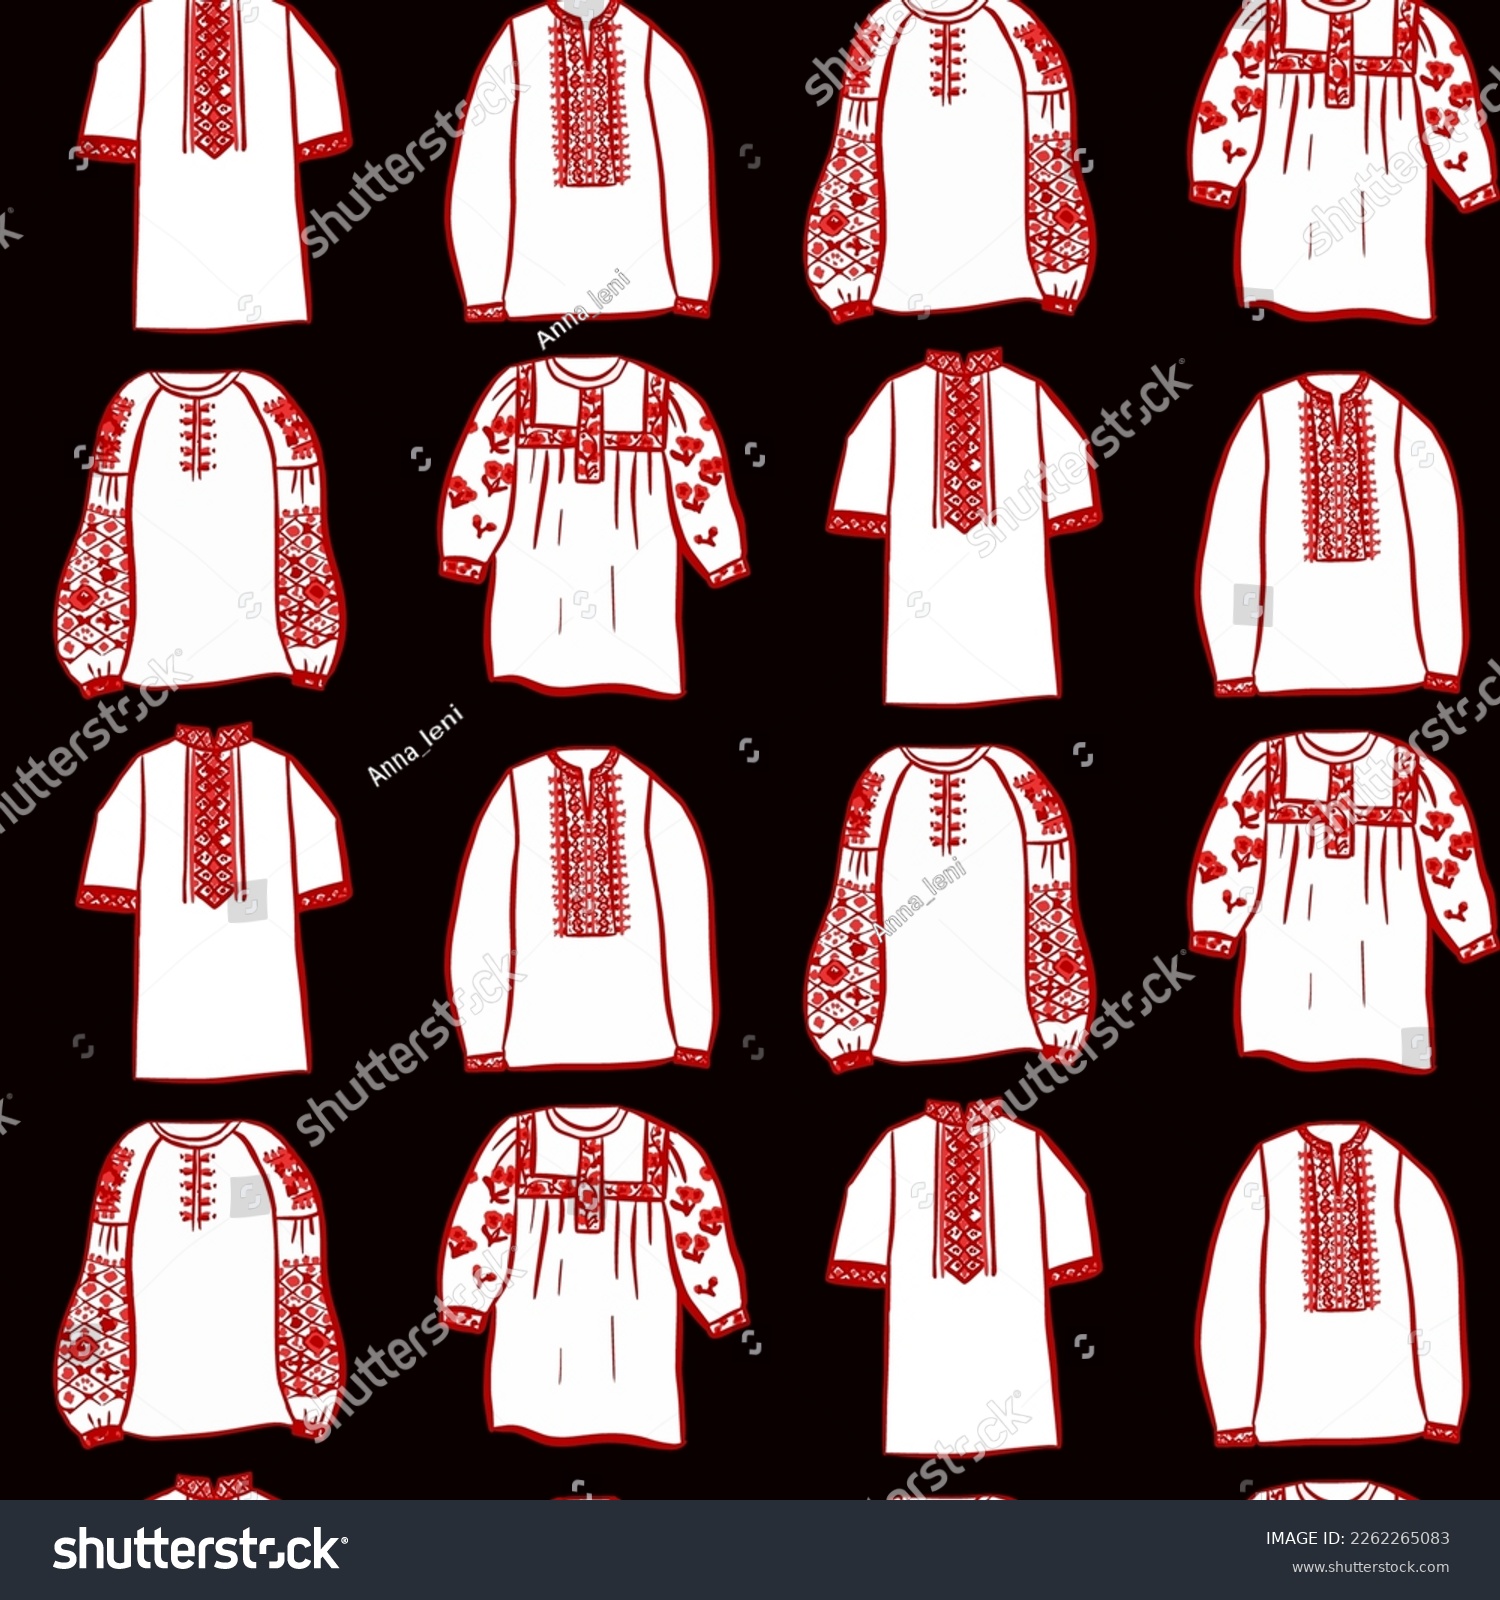 SVG of Black Ukraine Embroidery Shirt Seamless Pattern. Vector Illustration of Sketch Doodle Hand drawn Ukrainian Cultural Clothes. svg